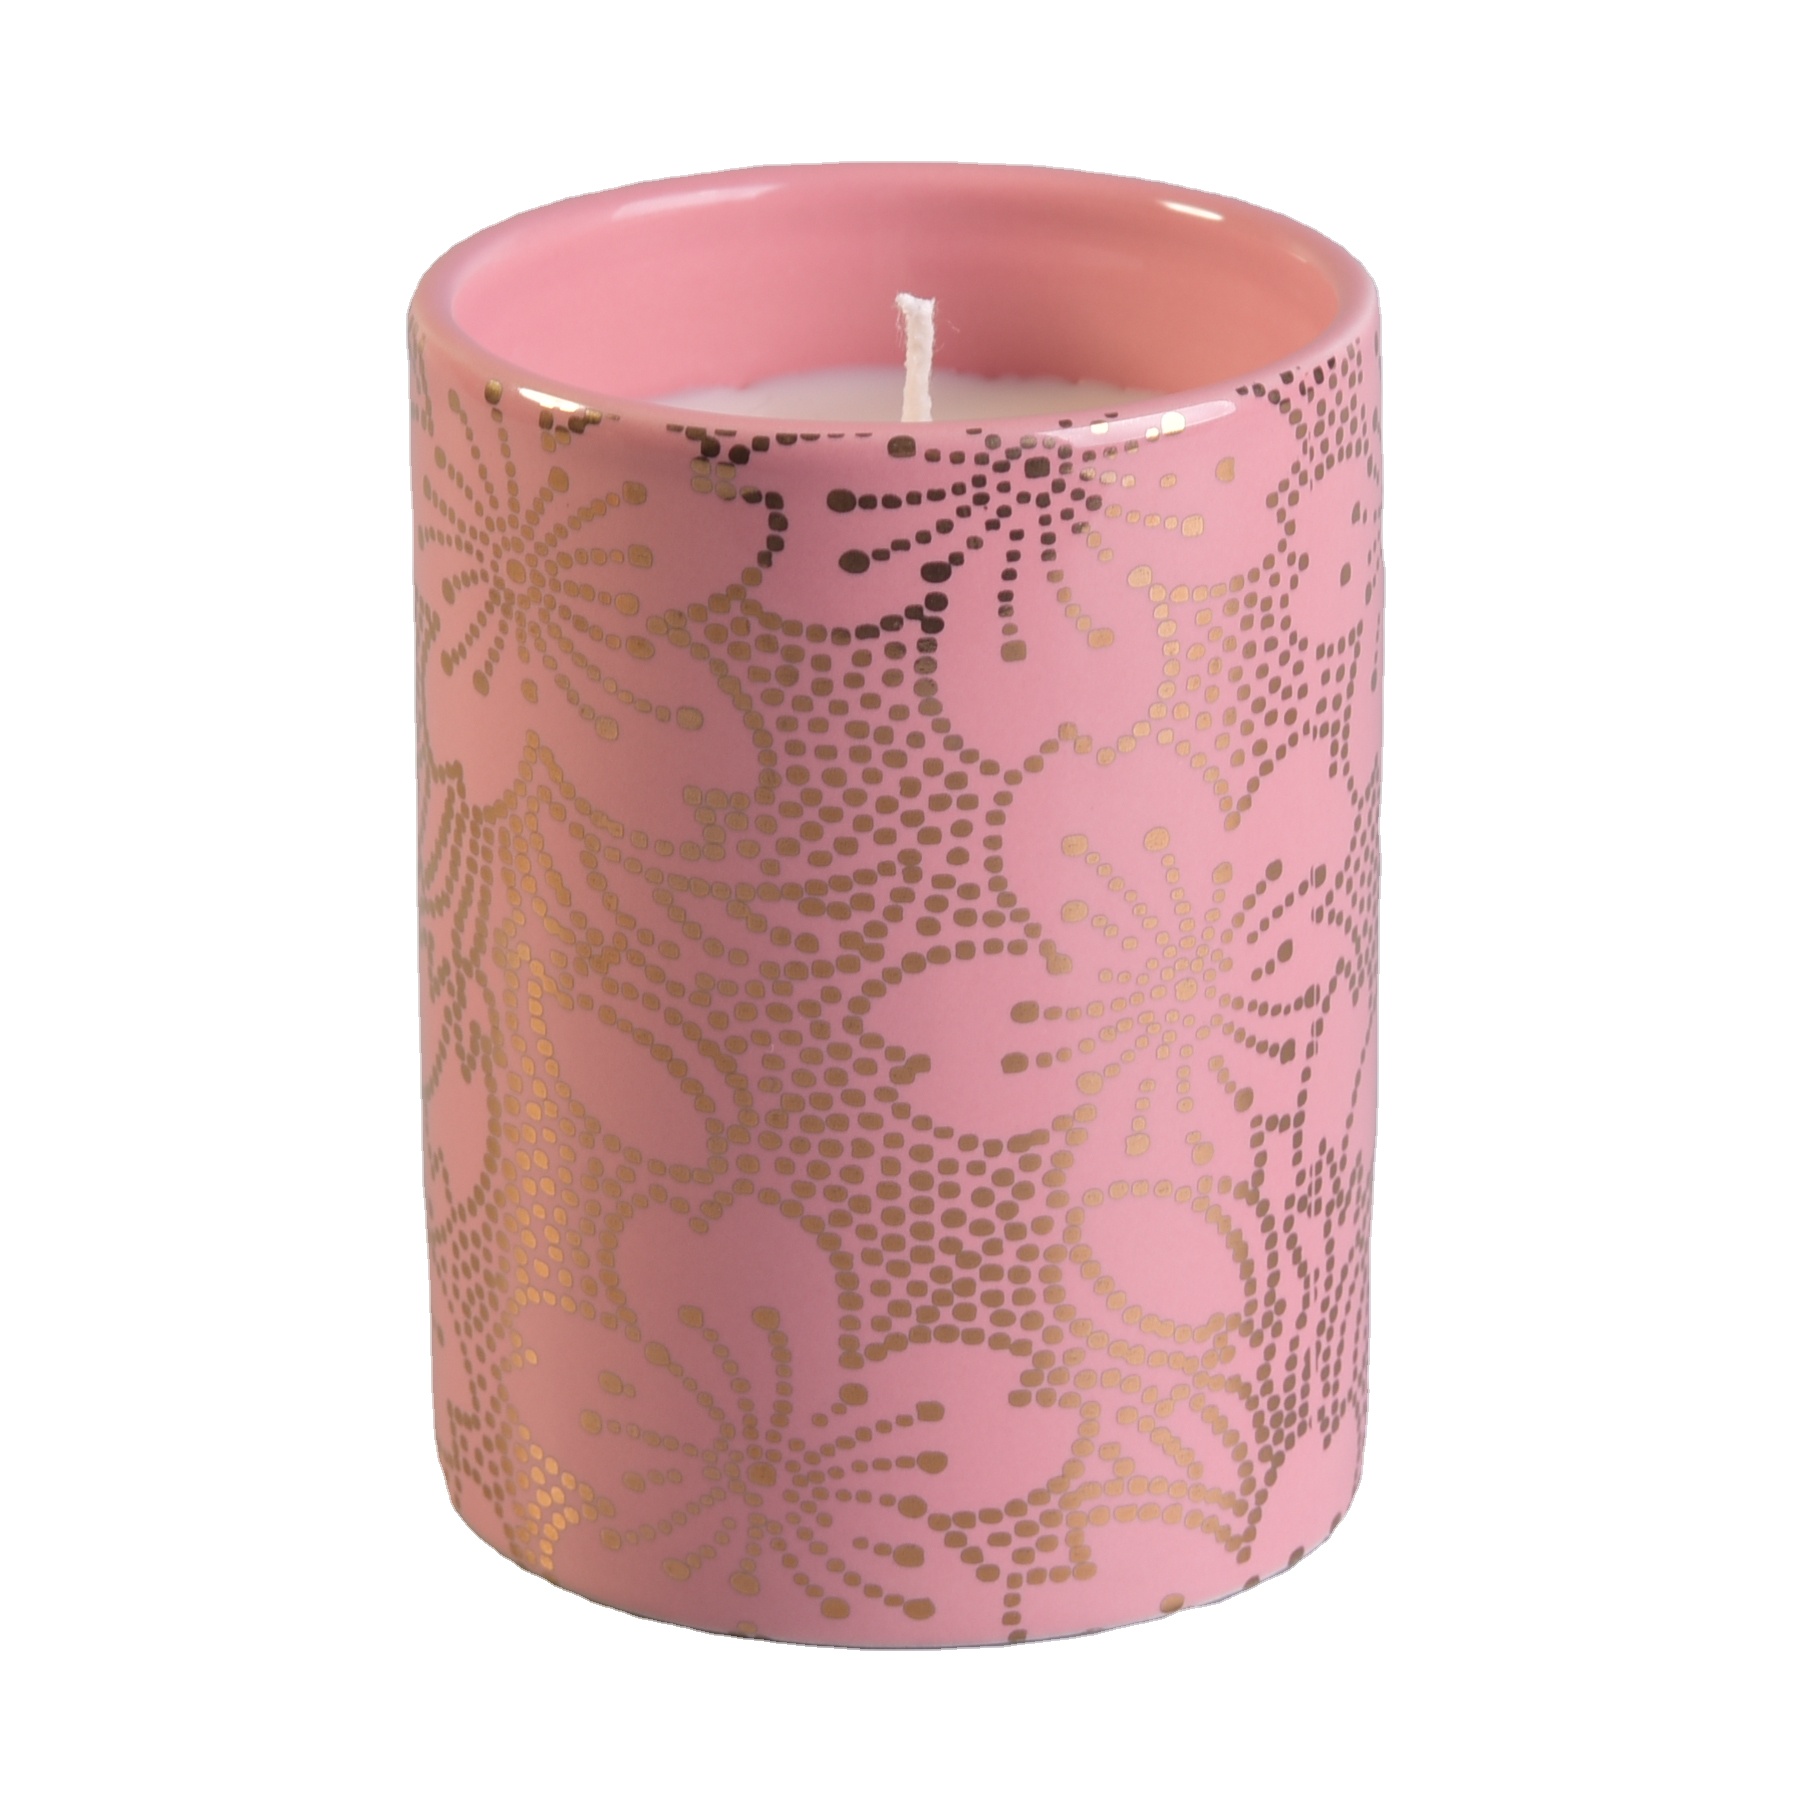 Sunny glassware custom tea light pink ceramic candle holder home decor